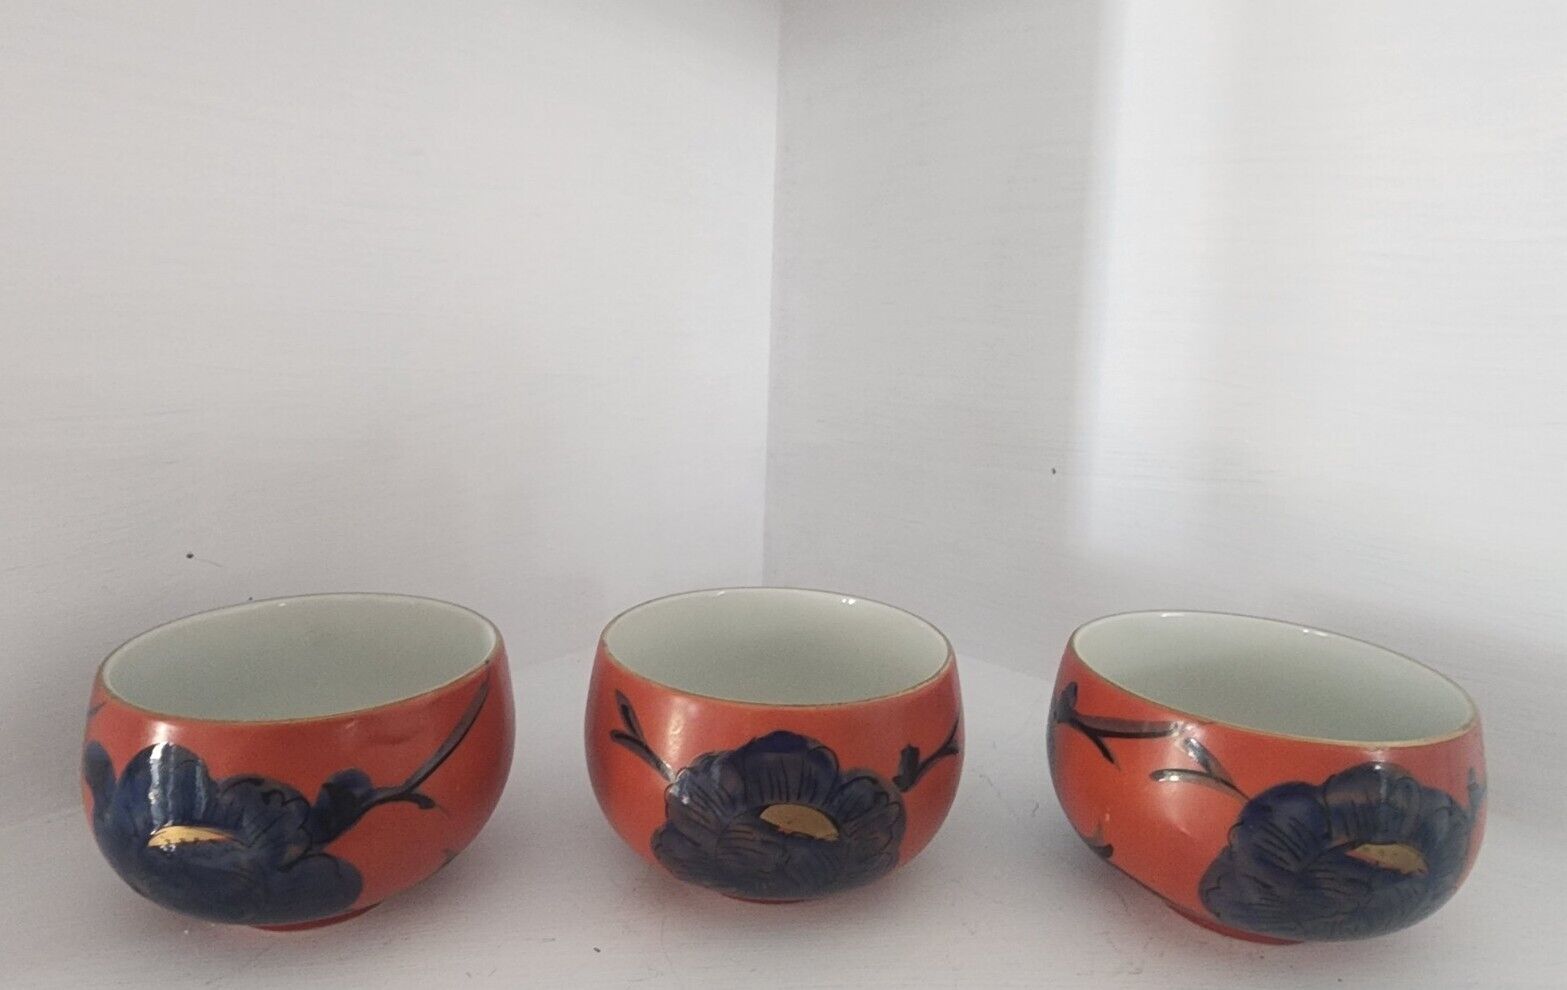 Takahashi San Francisco Orange And Blue Tea Bowls with Gold Trim, 3 Cups